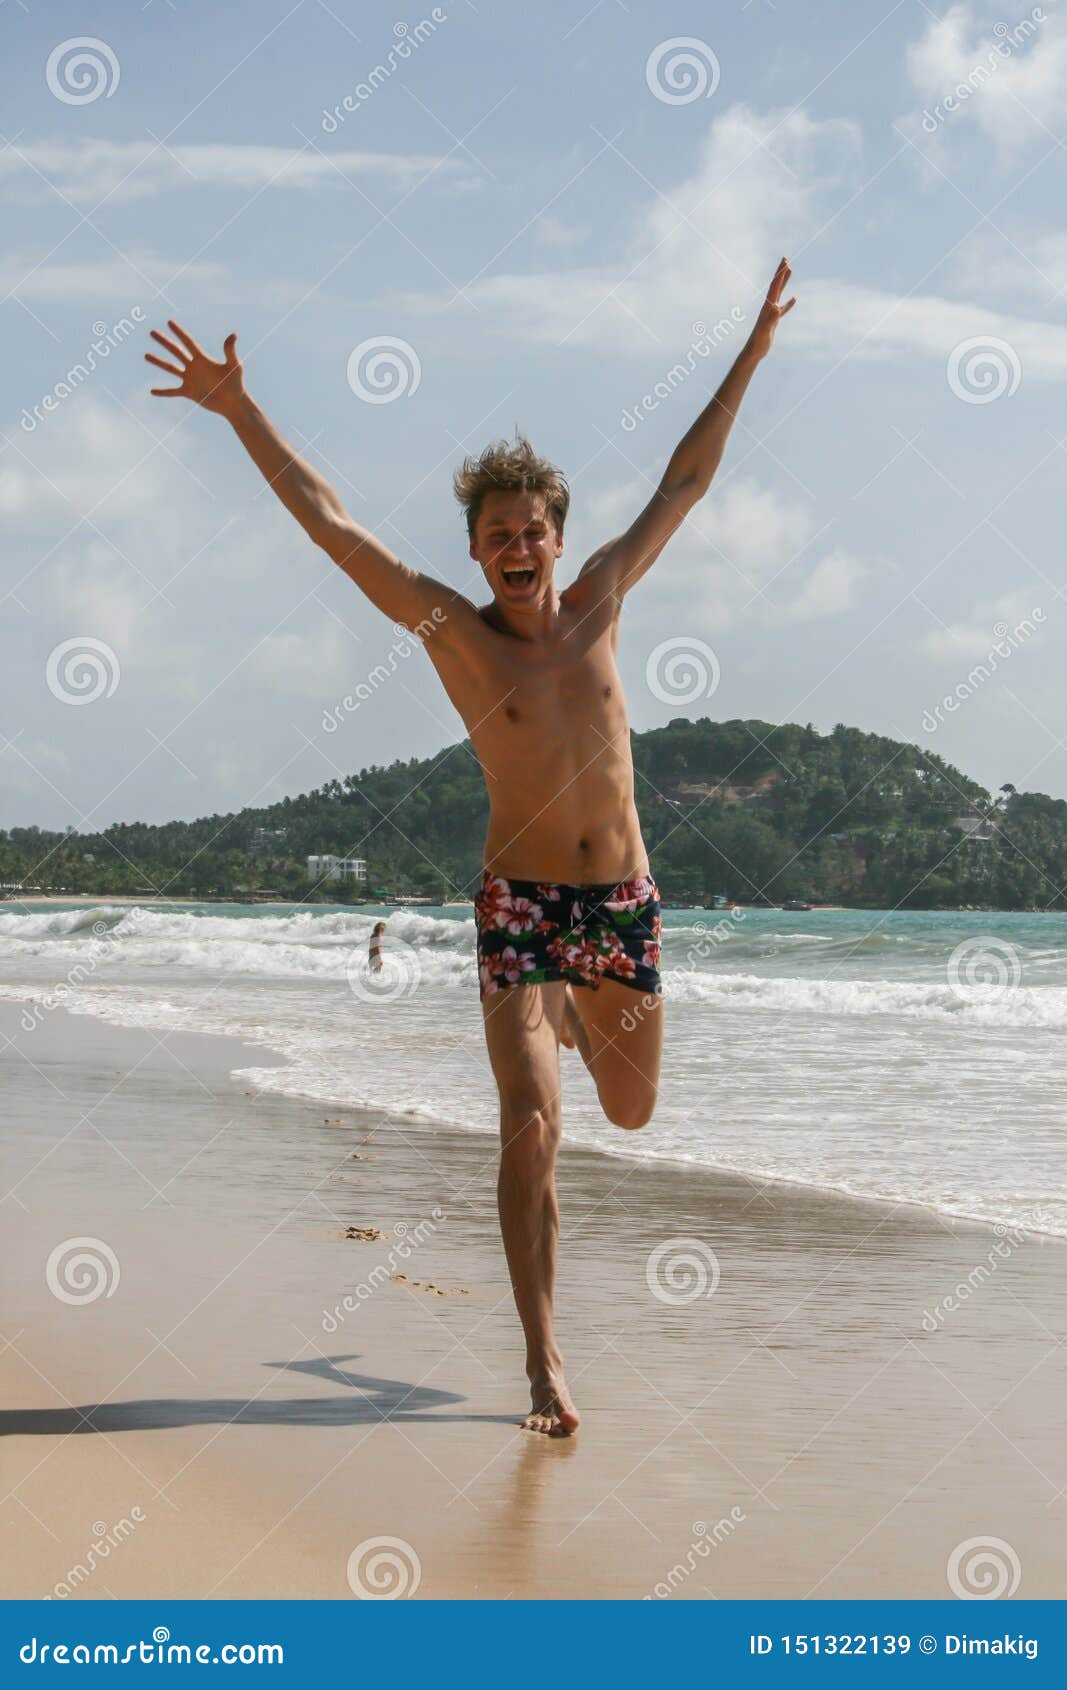 https://thumbs.dreamstime.com/z/european-tourist-wearing-red-swimming-underwear-running-jumping-beach-phuket-thailand-european-tourist-wearing-red-151322139.jpg